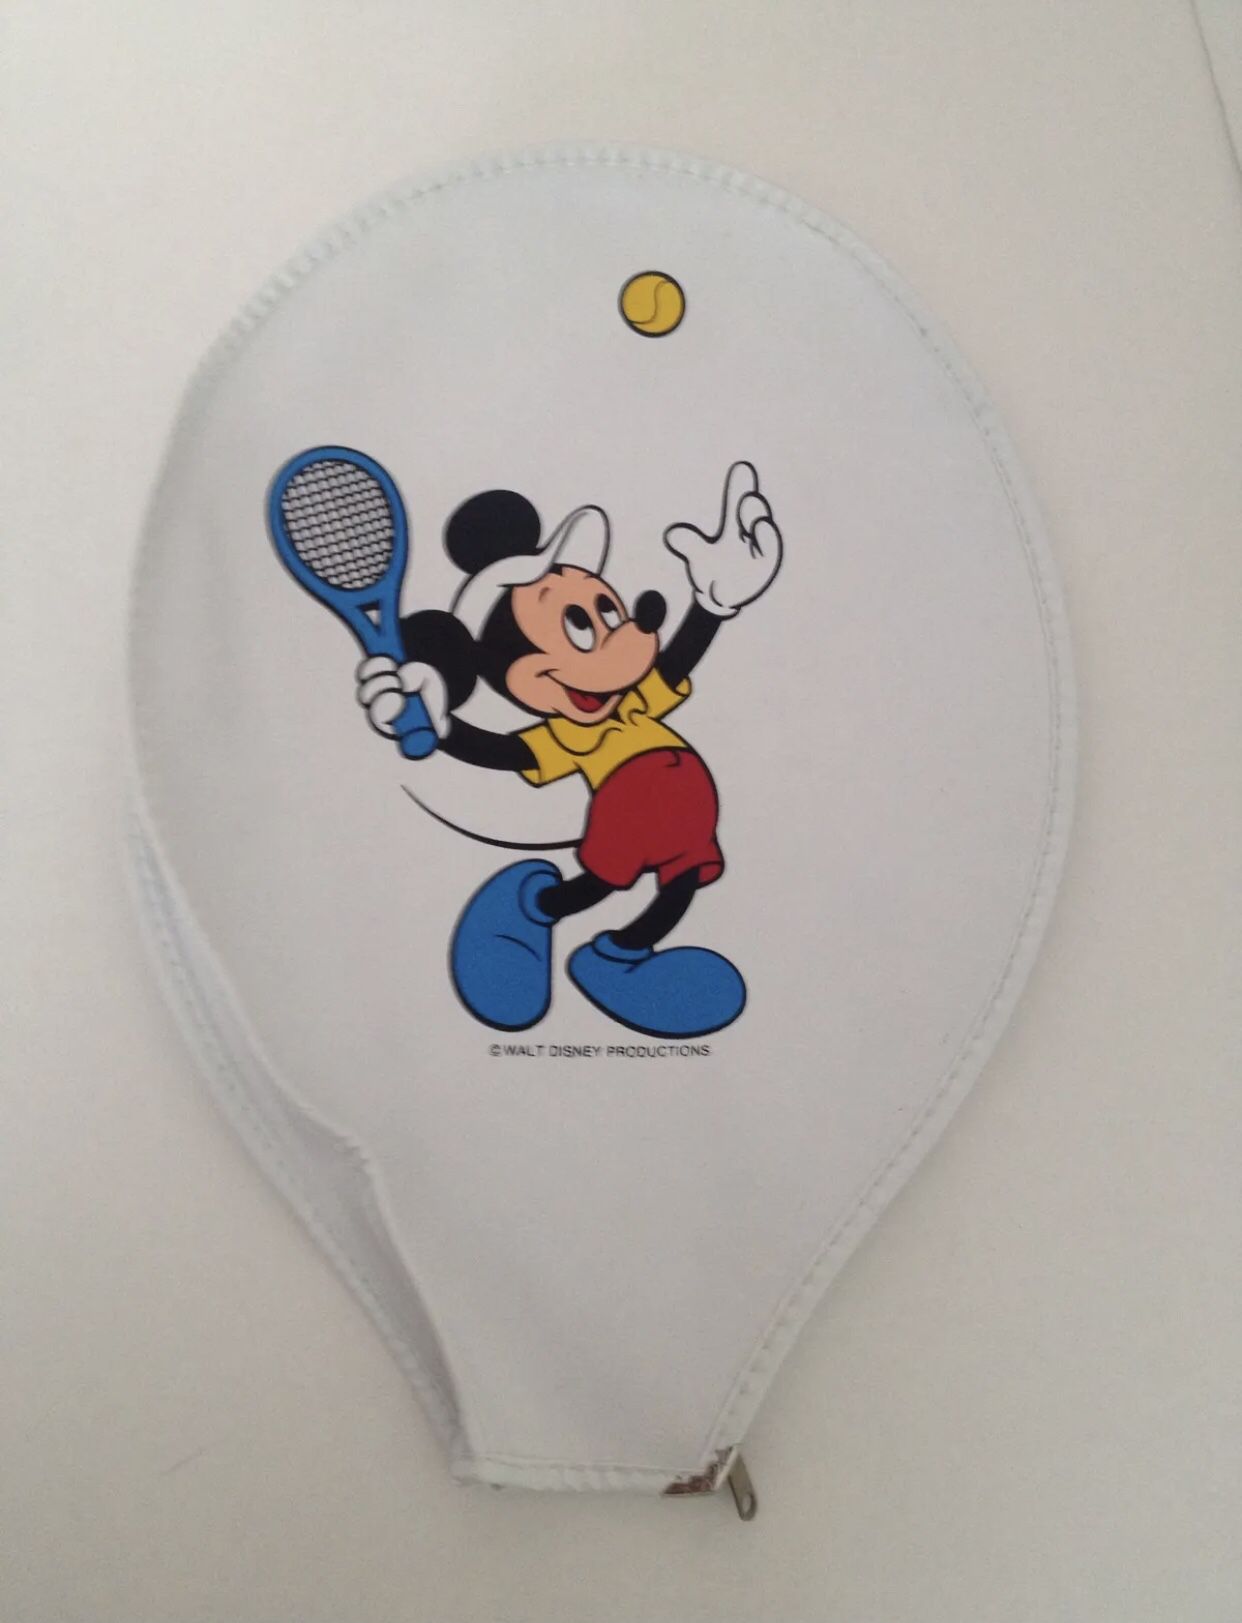 Walt Disney Productions Tennis Racket Pouch Sleeve